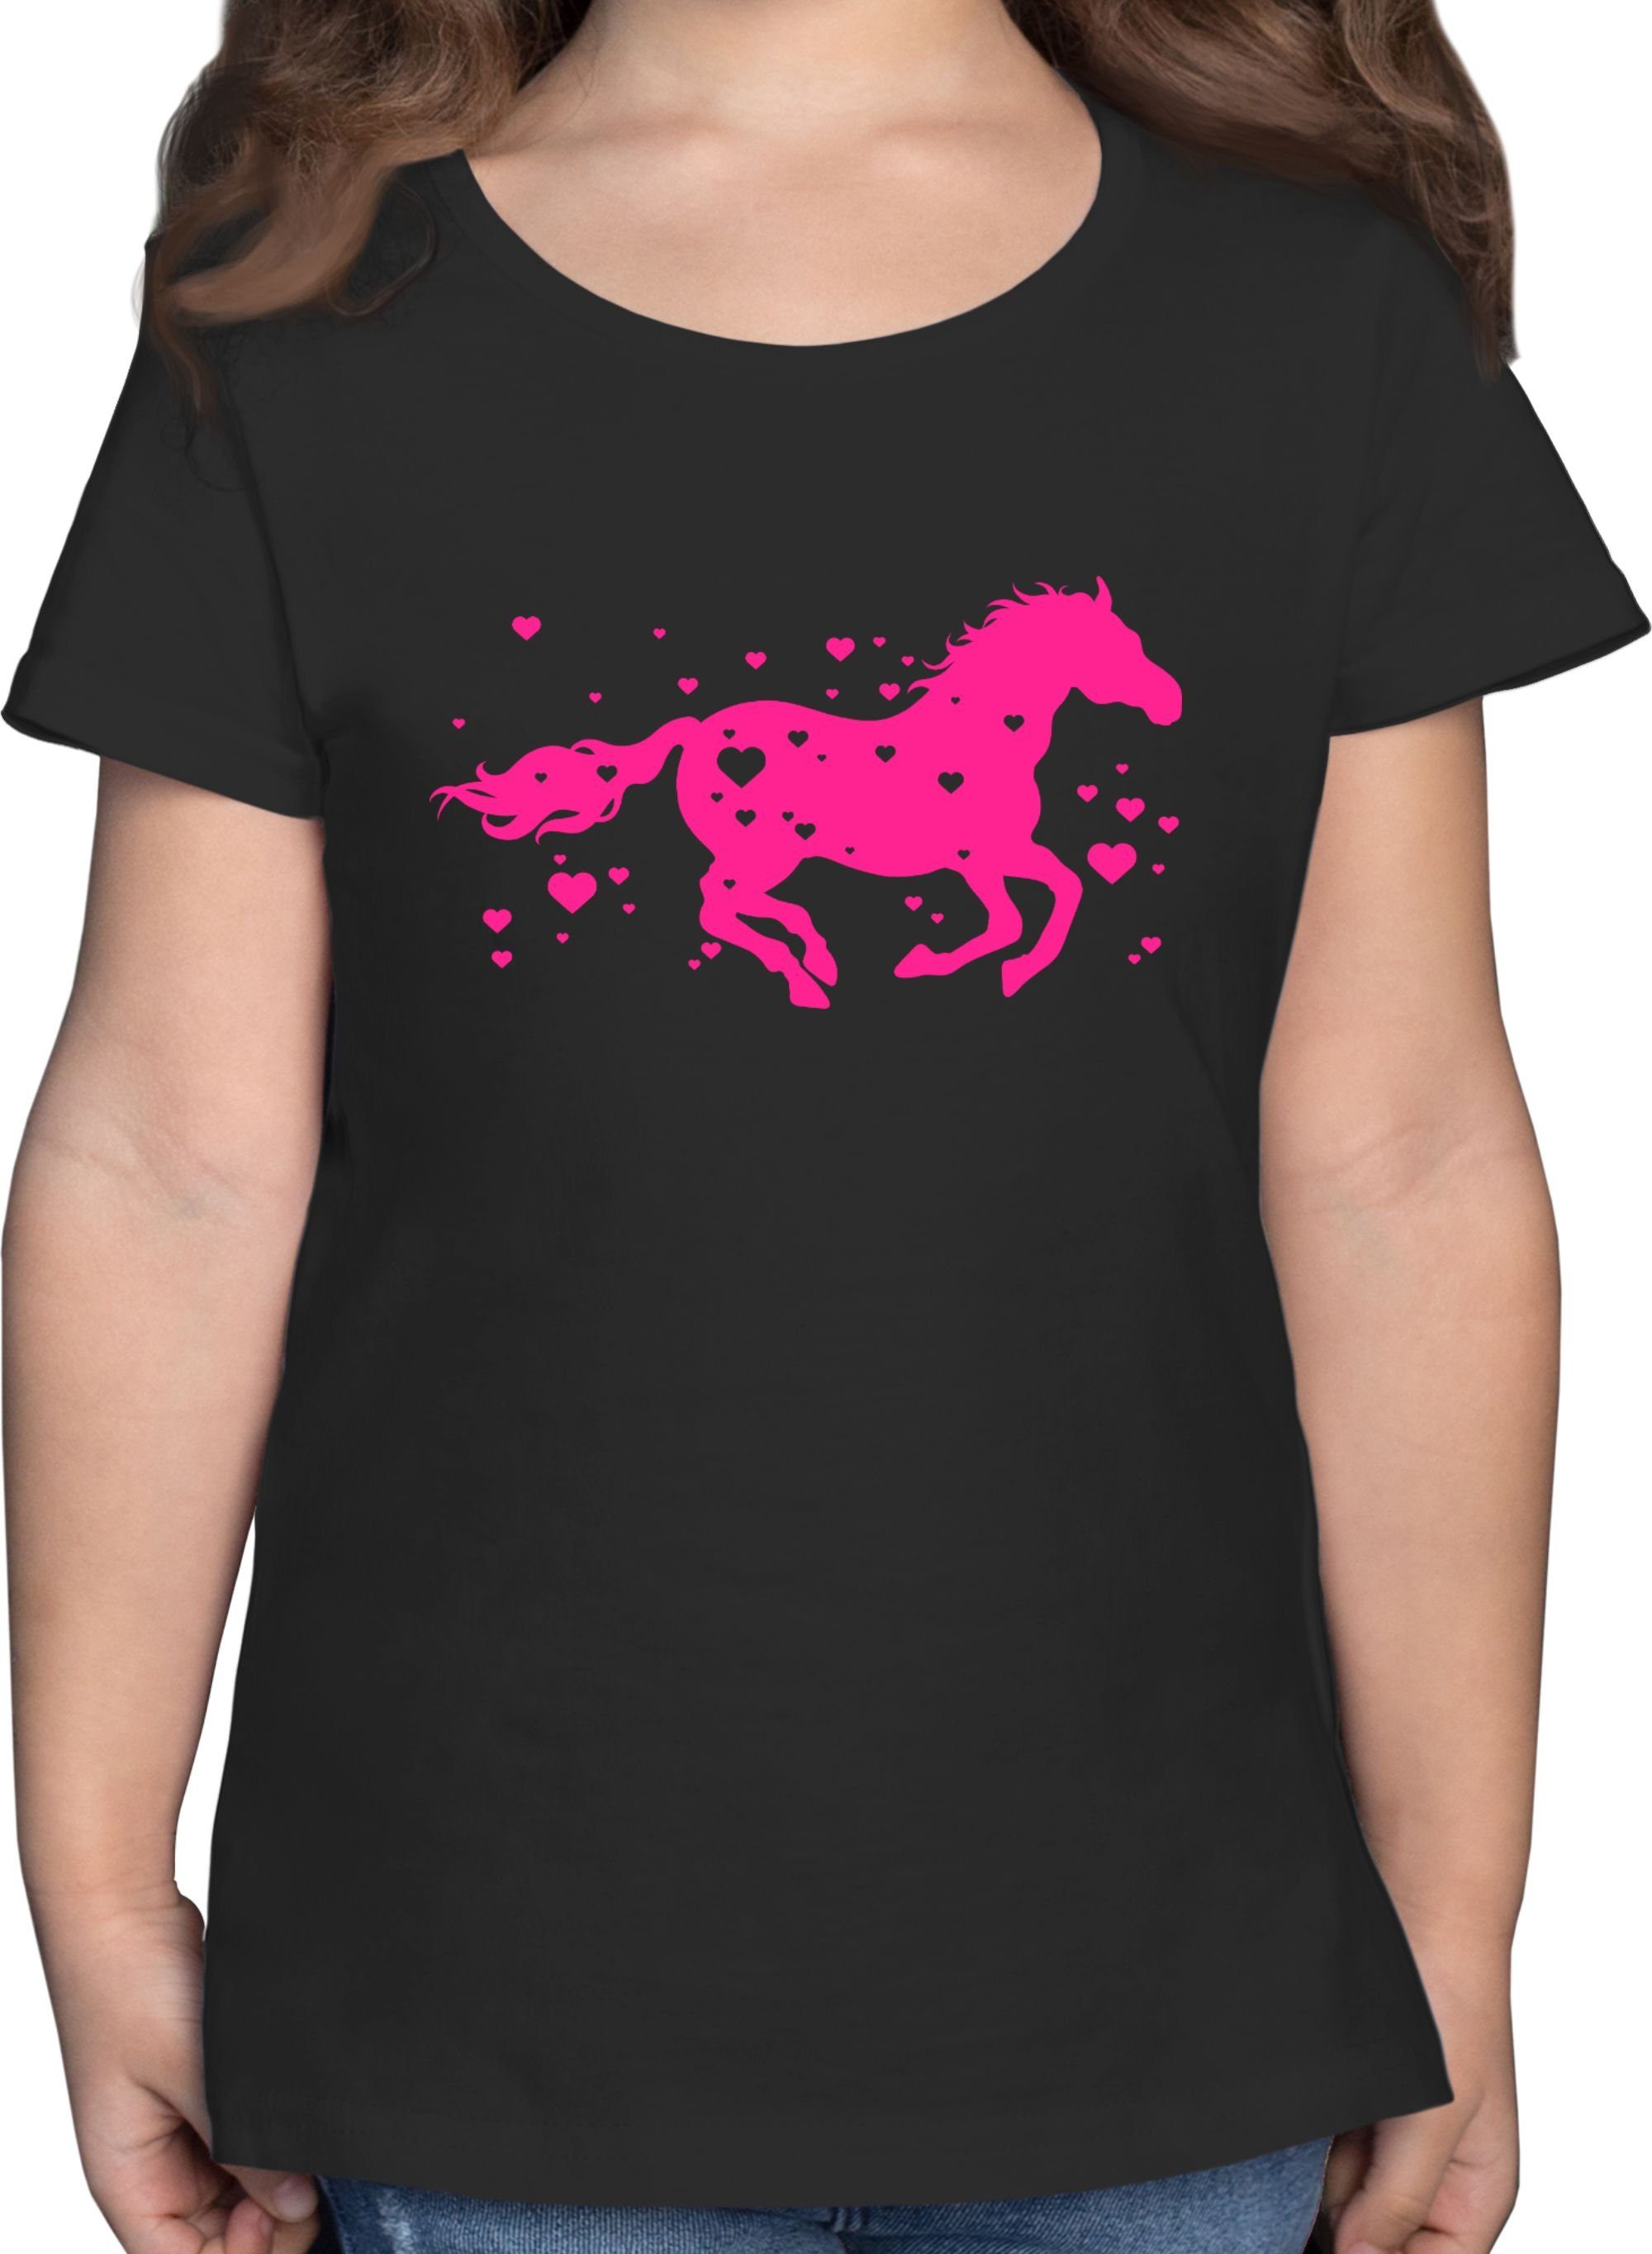 Größe 140 152 Kinder T Shirt Soulhorse Reiter Reitshirt Einhorn pink lila % AV 